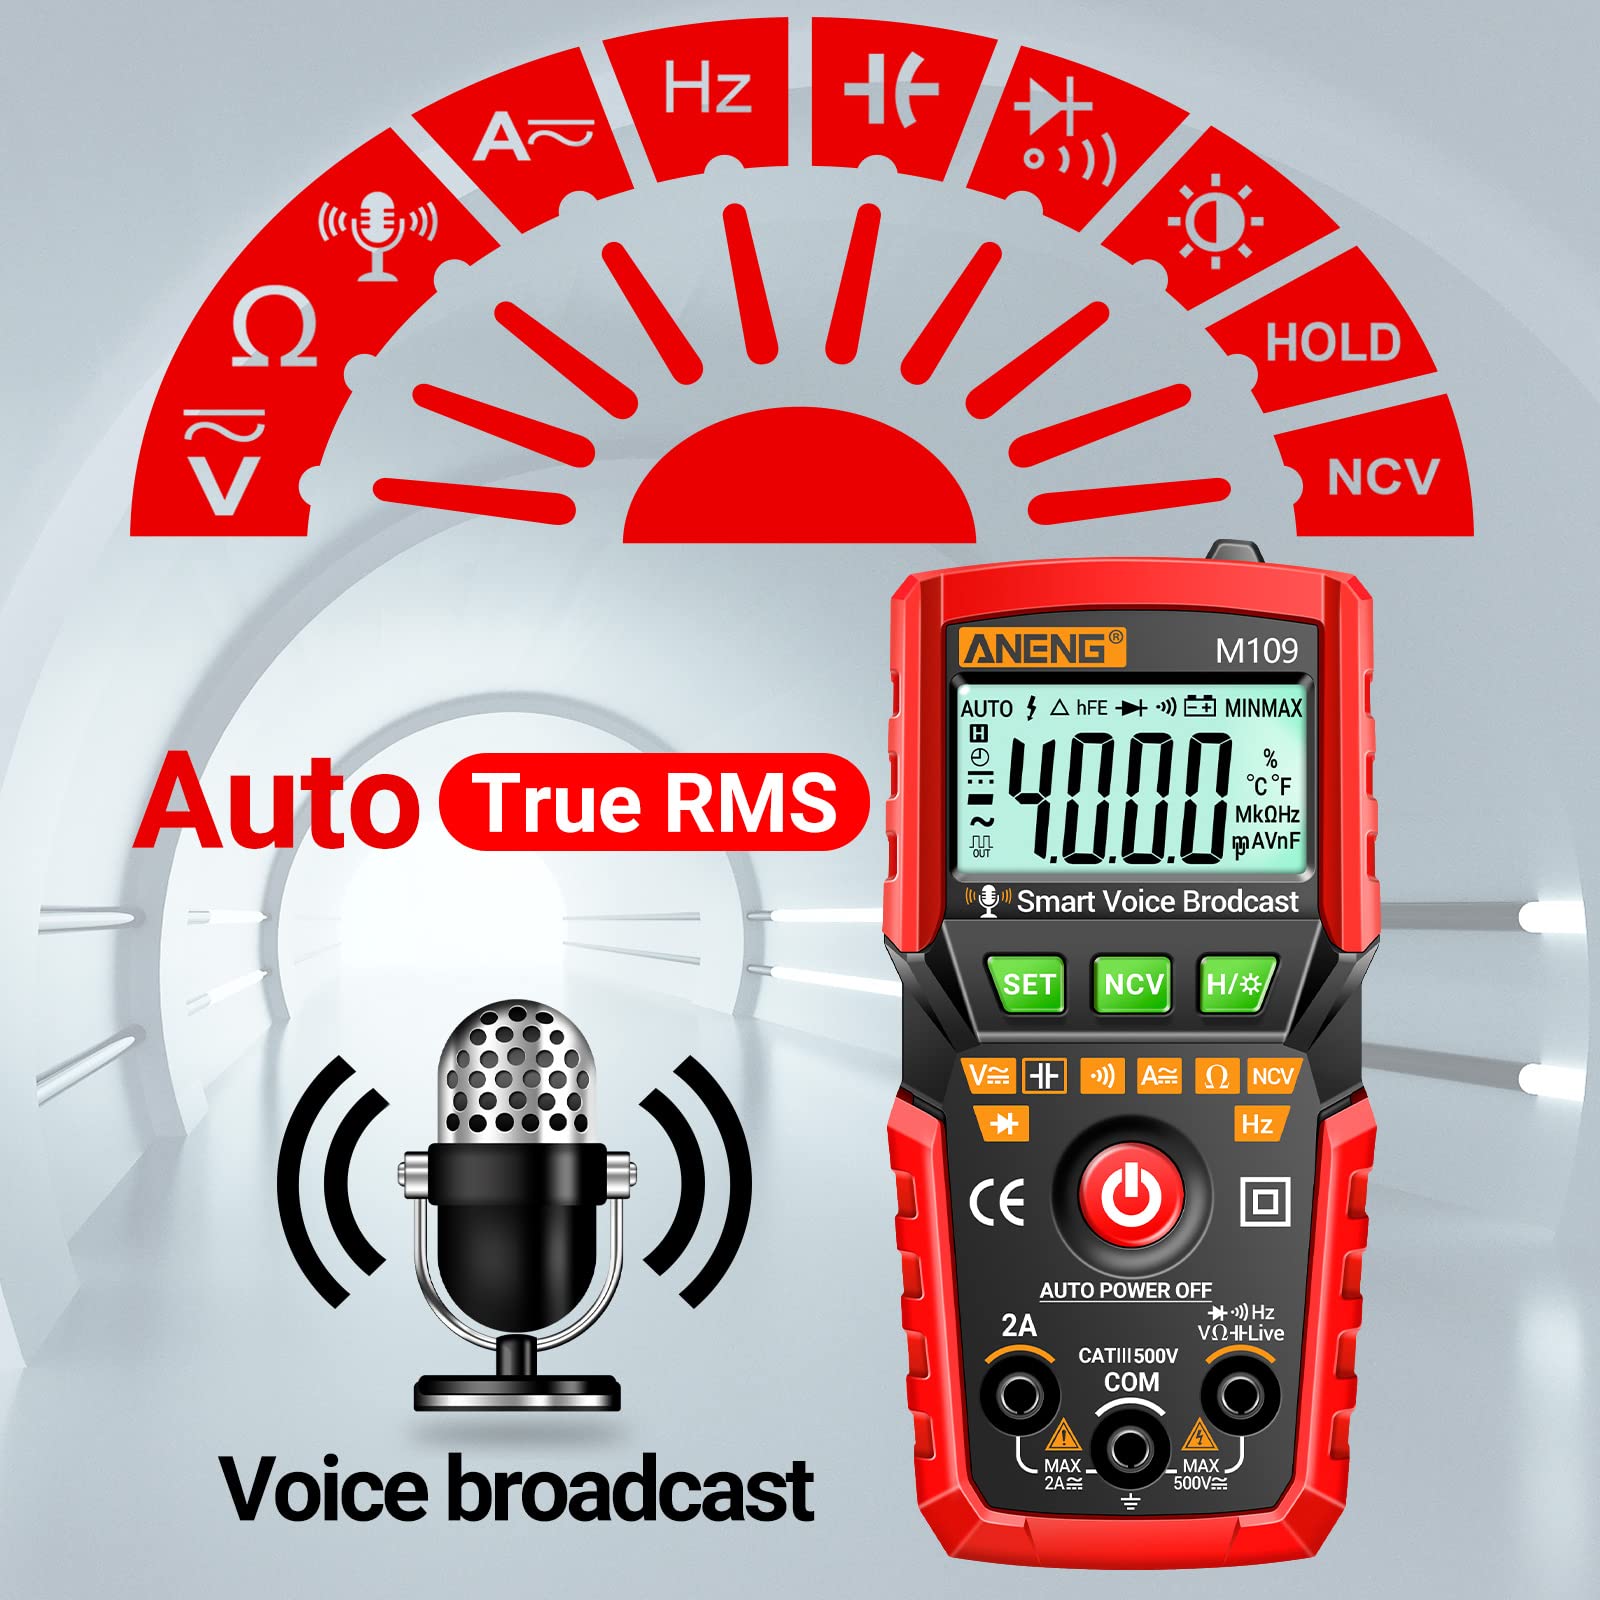 ANENG Pocket Multimeter Voice Broadcast Electrical Tester 4000Counts Ohm meter for AC/DC Voltage,Current,NCV,Resistance,Continuity,Capacitance,Diodes,Temperature Meansurement,Volt Meter for Automotive